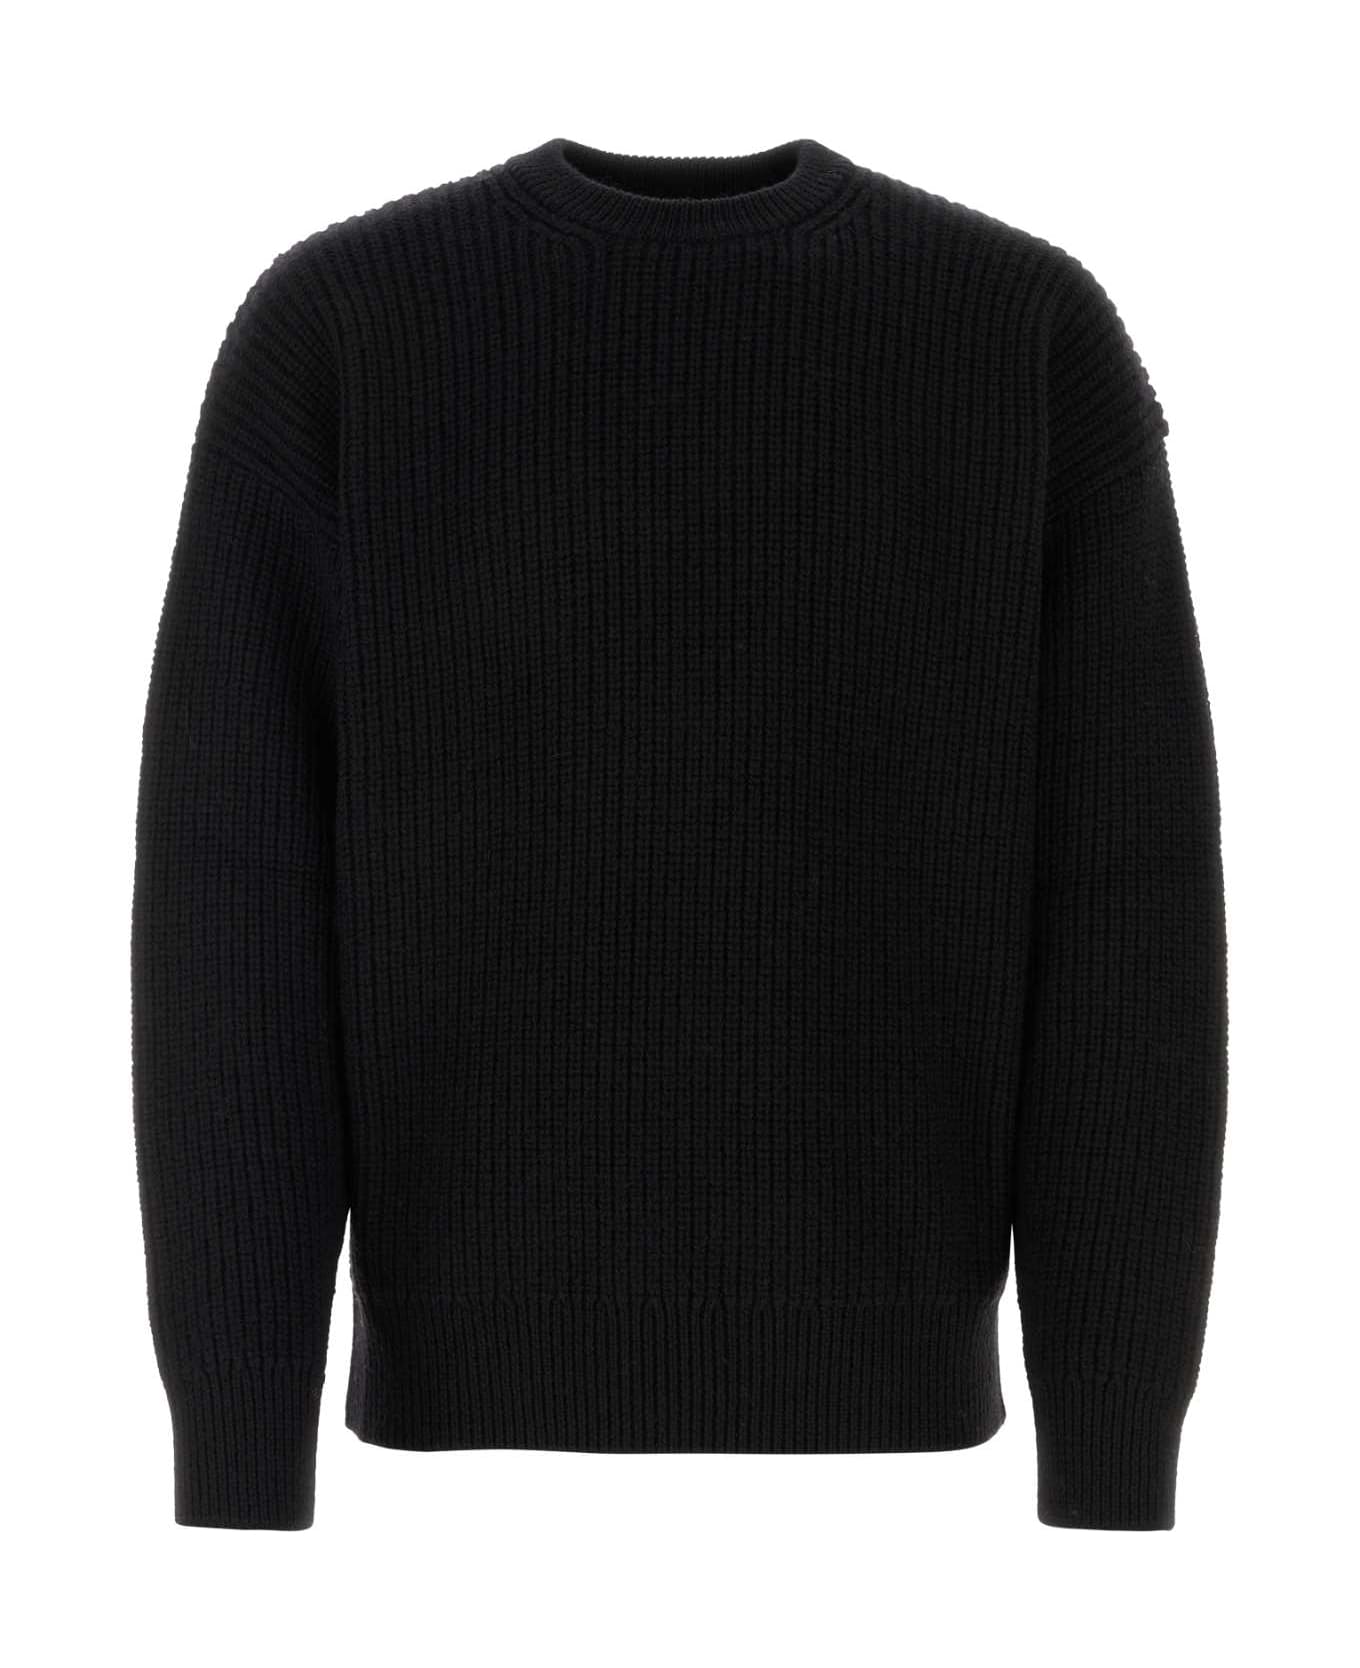 Marine Serre Black Wool Blend Sweater - BK99